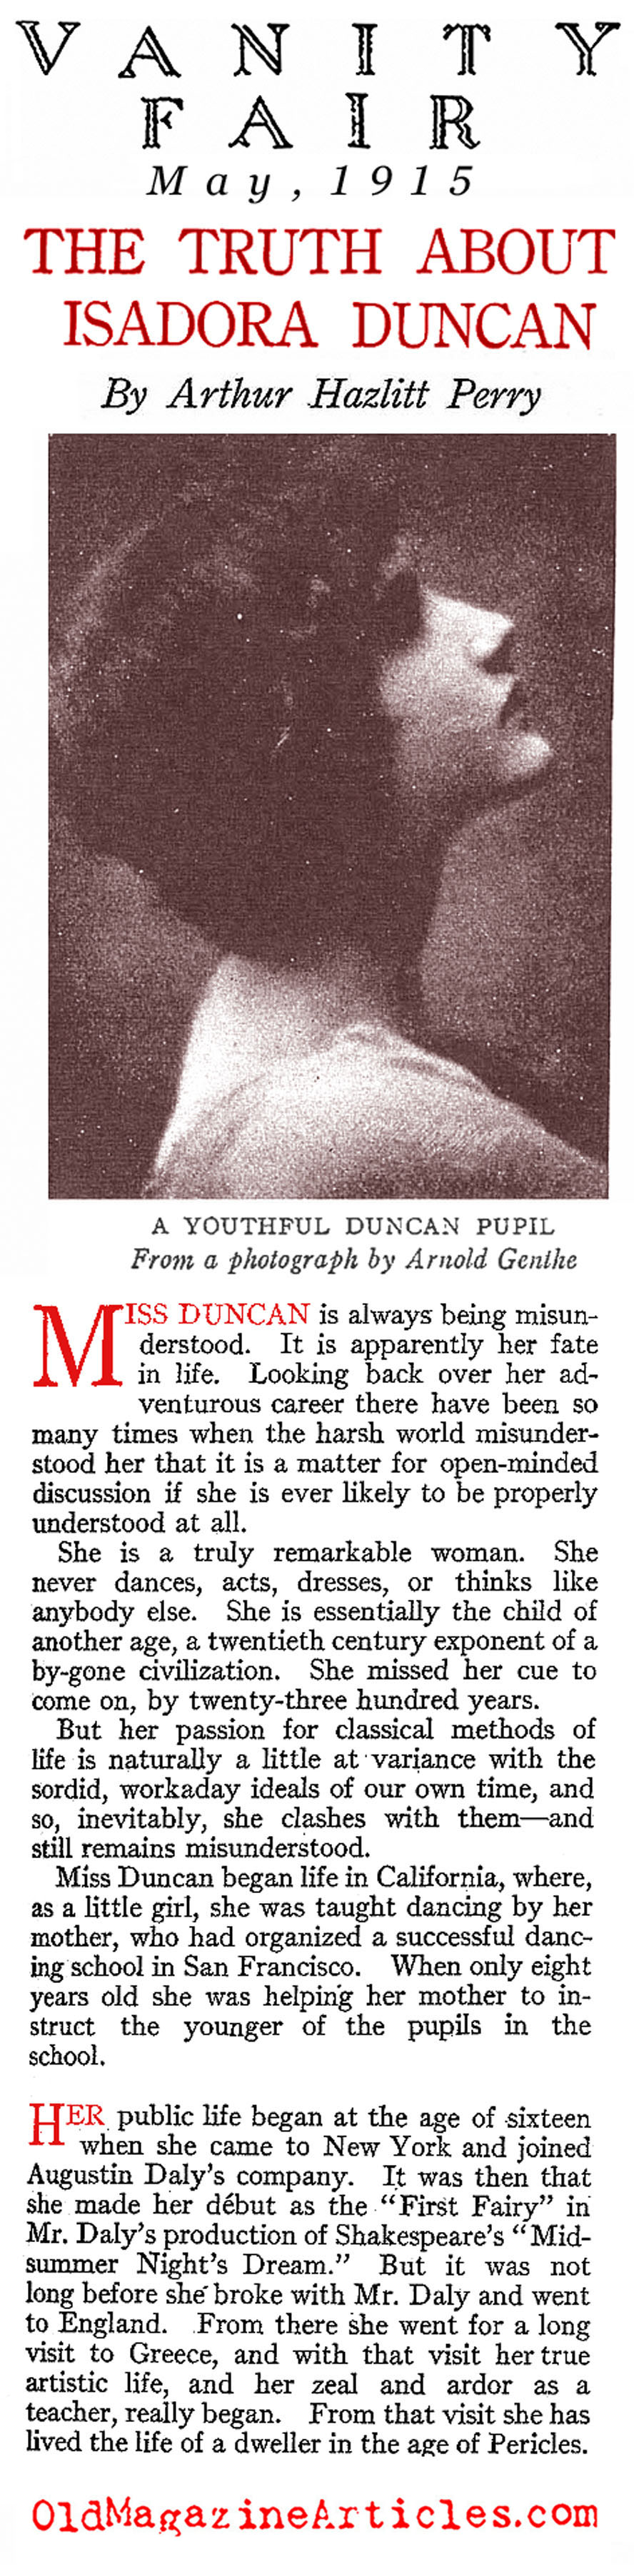 A Profile of Isadora Duncan (Vanity Fair, 1915)